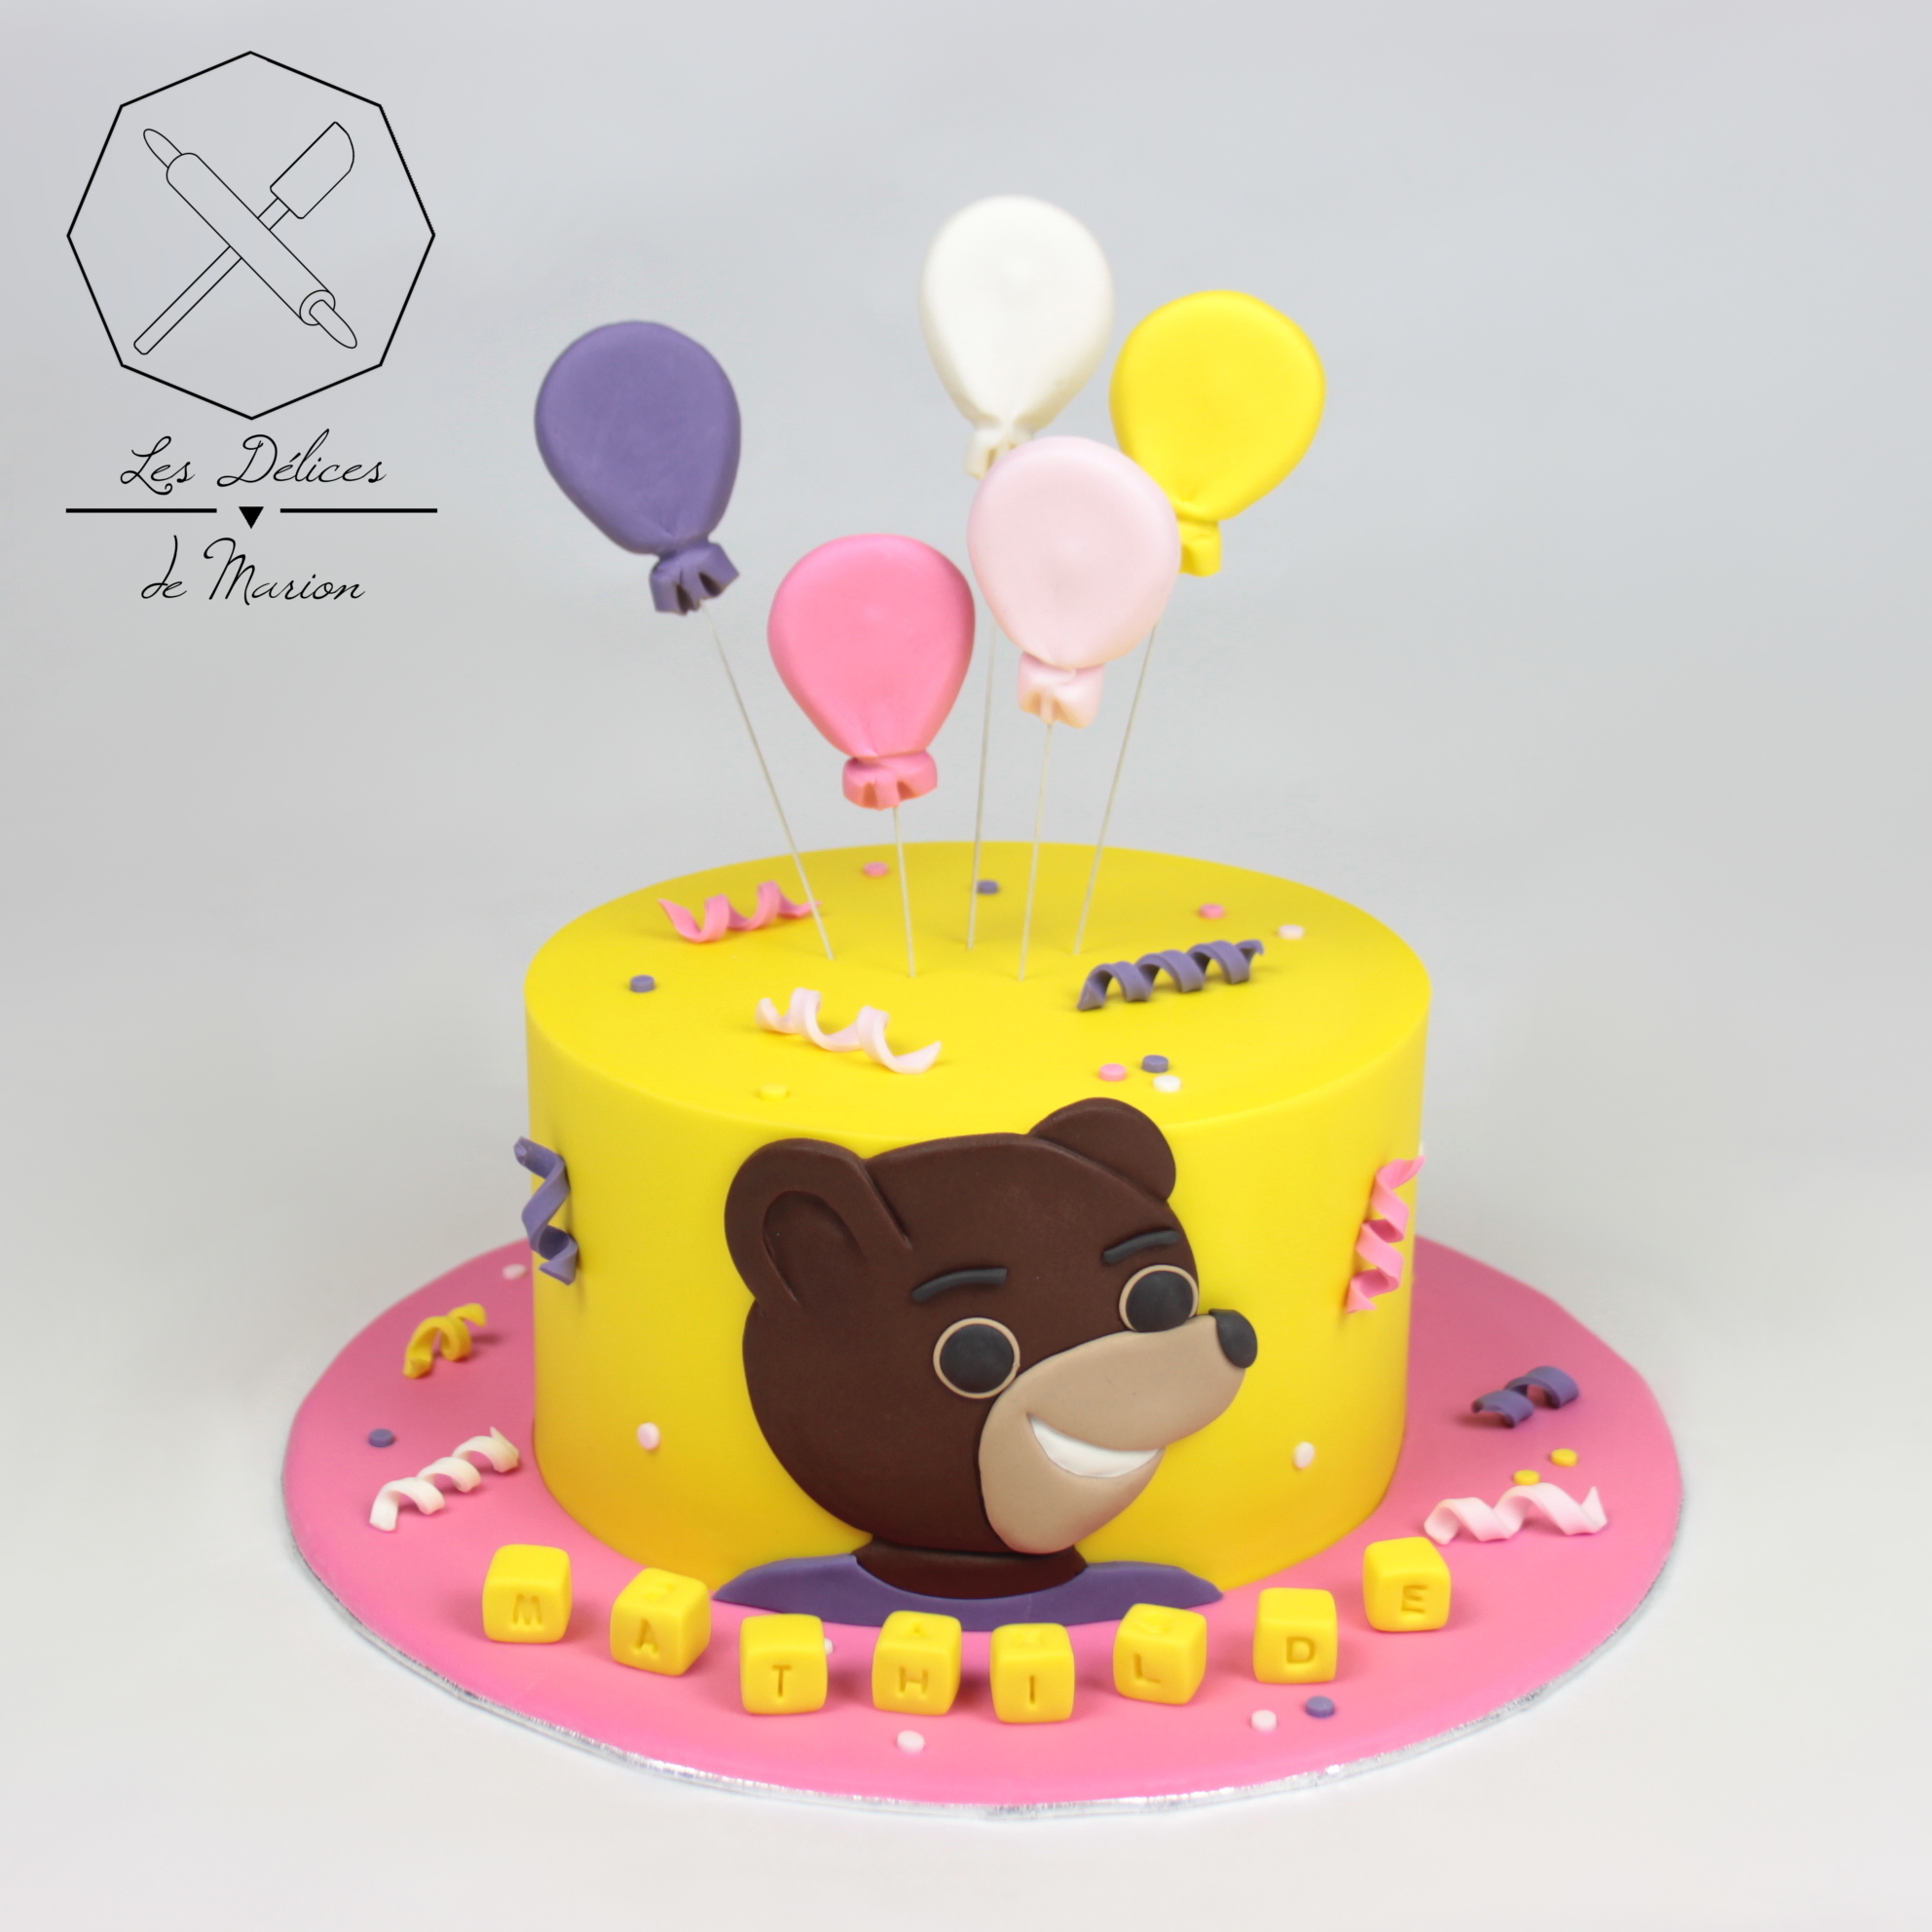 gateau_petit_ours_brun_ballons_cotillons_cake-design_delices-marion